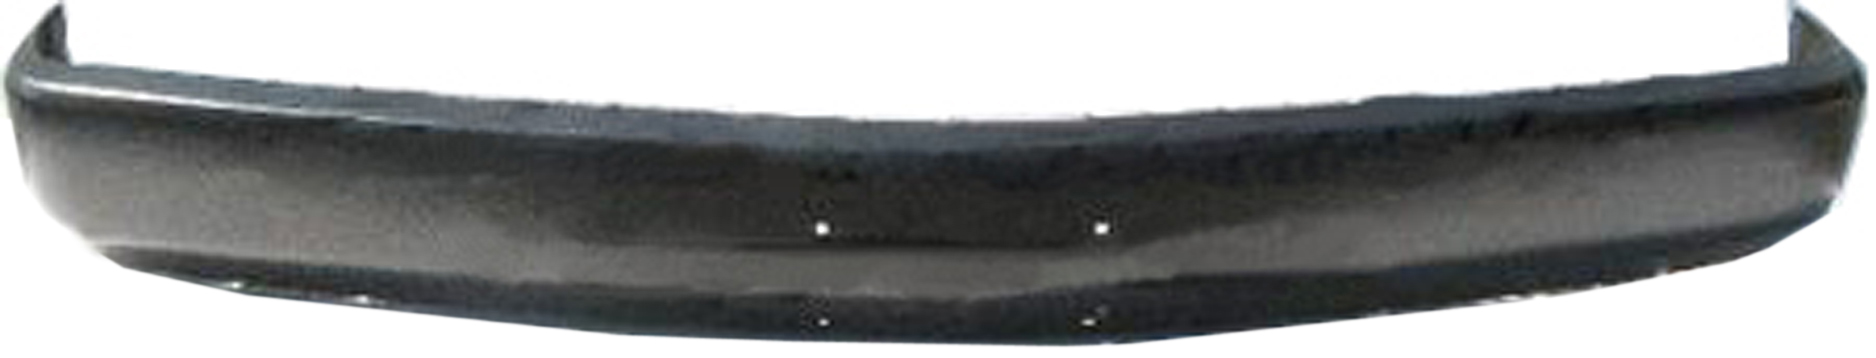 Aftermarket METAL FRONT BUMPERS for CHEVROLET - K2500 SUBURBAN, K2500 SUBURBAN,92-99,Front bumper face bar